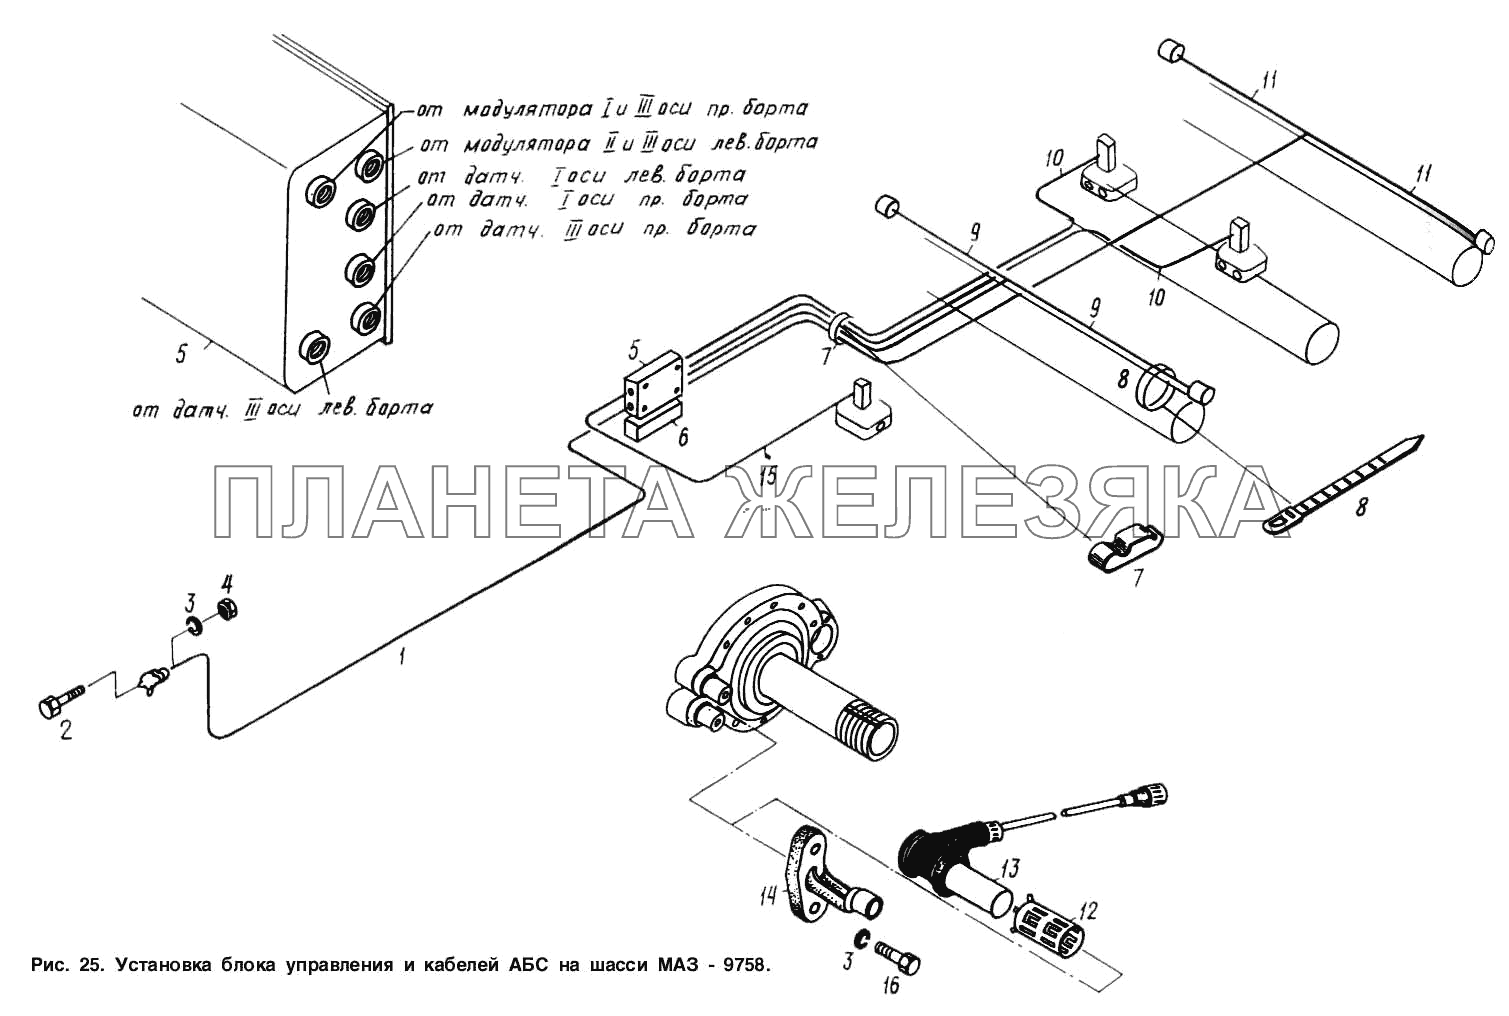 Установка блока управления и кабелей АБС на шасси МАЗ-9758 МАЗ-9758-30